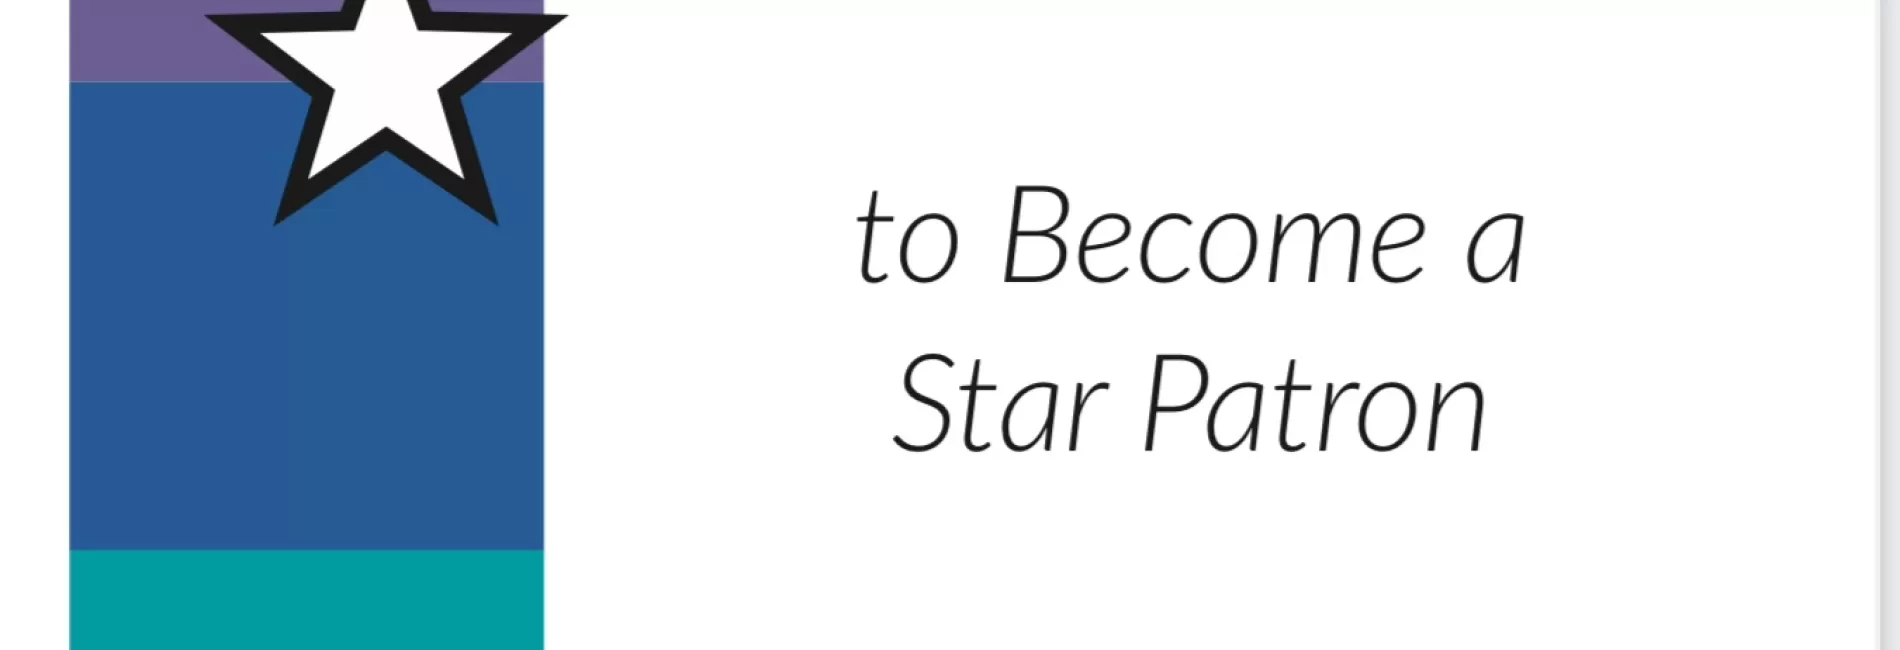 Star Patron Program